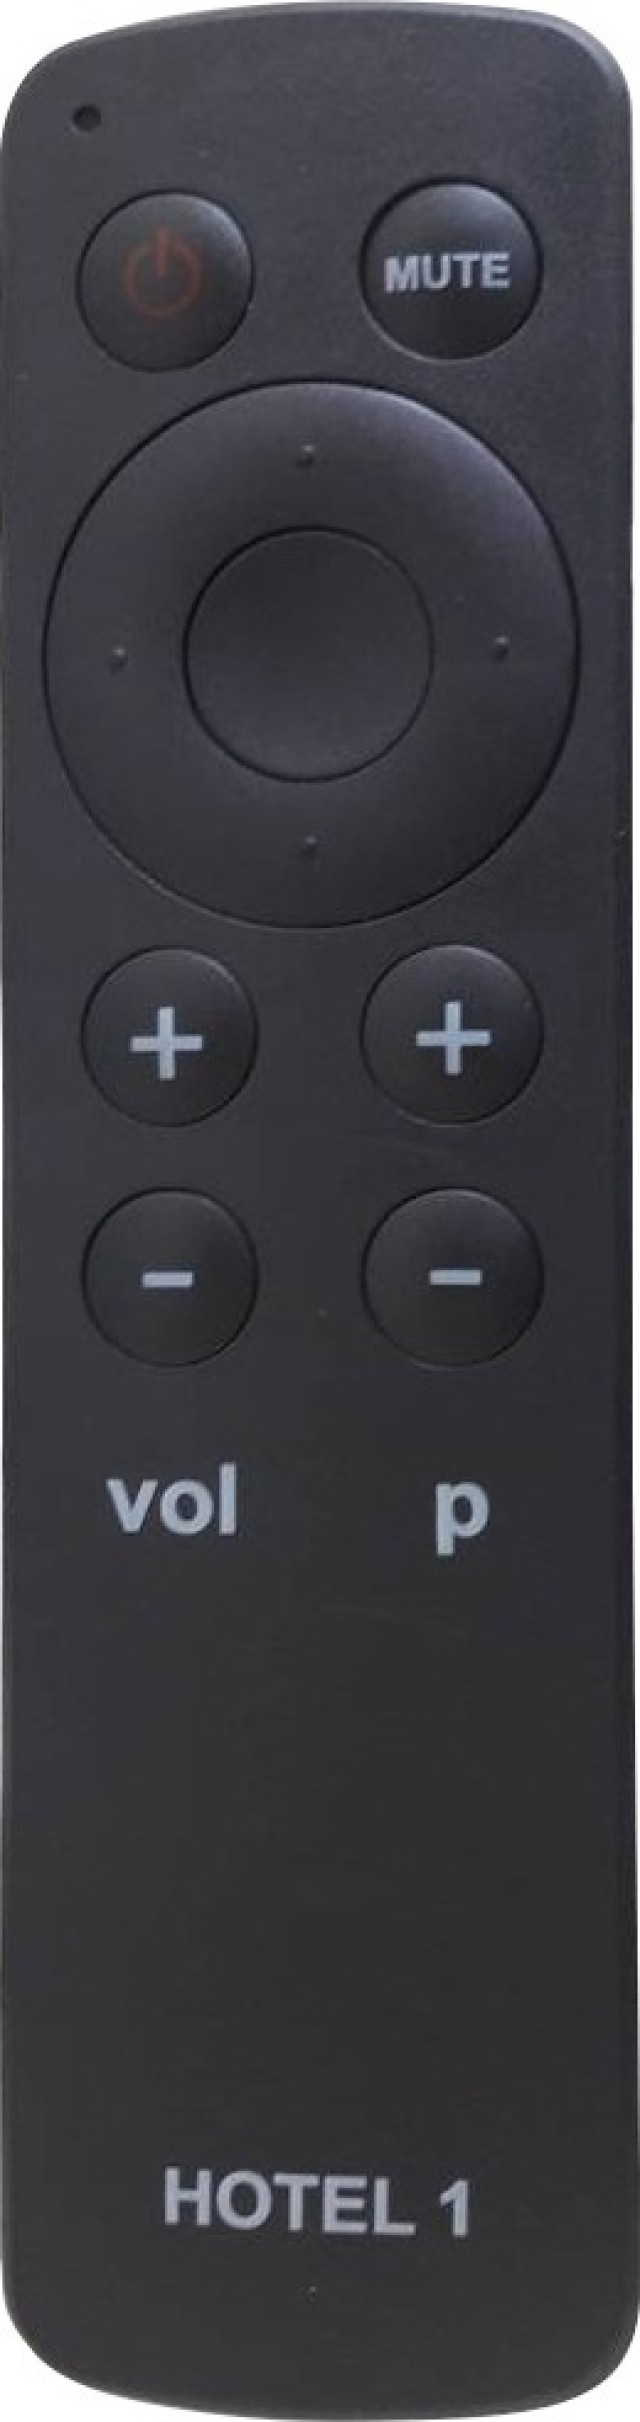 HOTEL1 Compatible remote control for LG